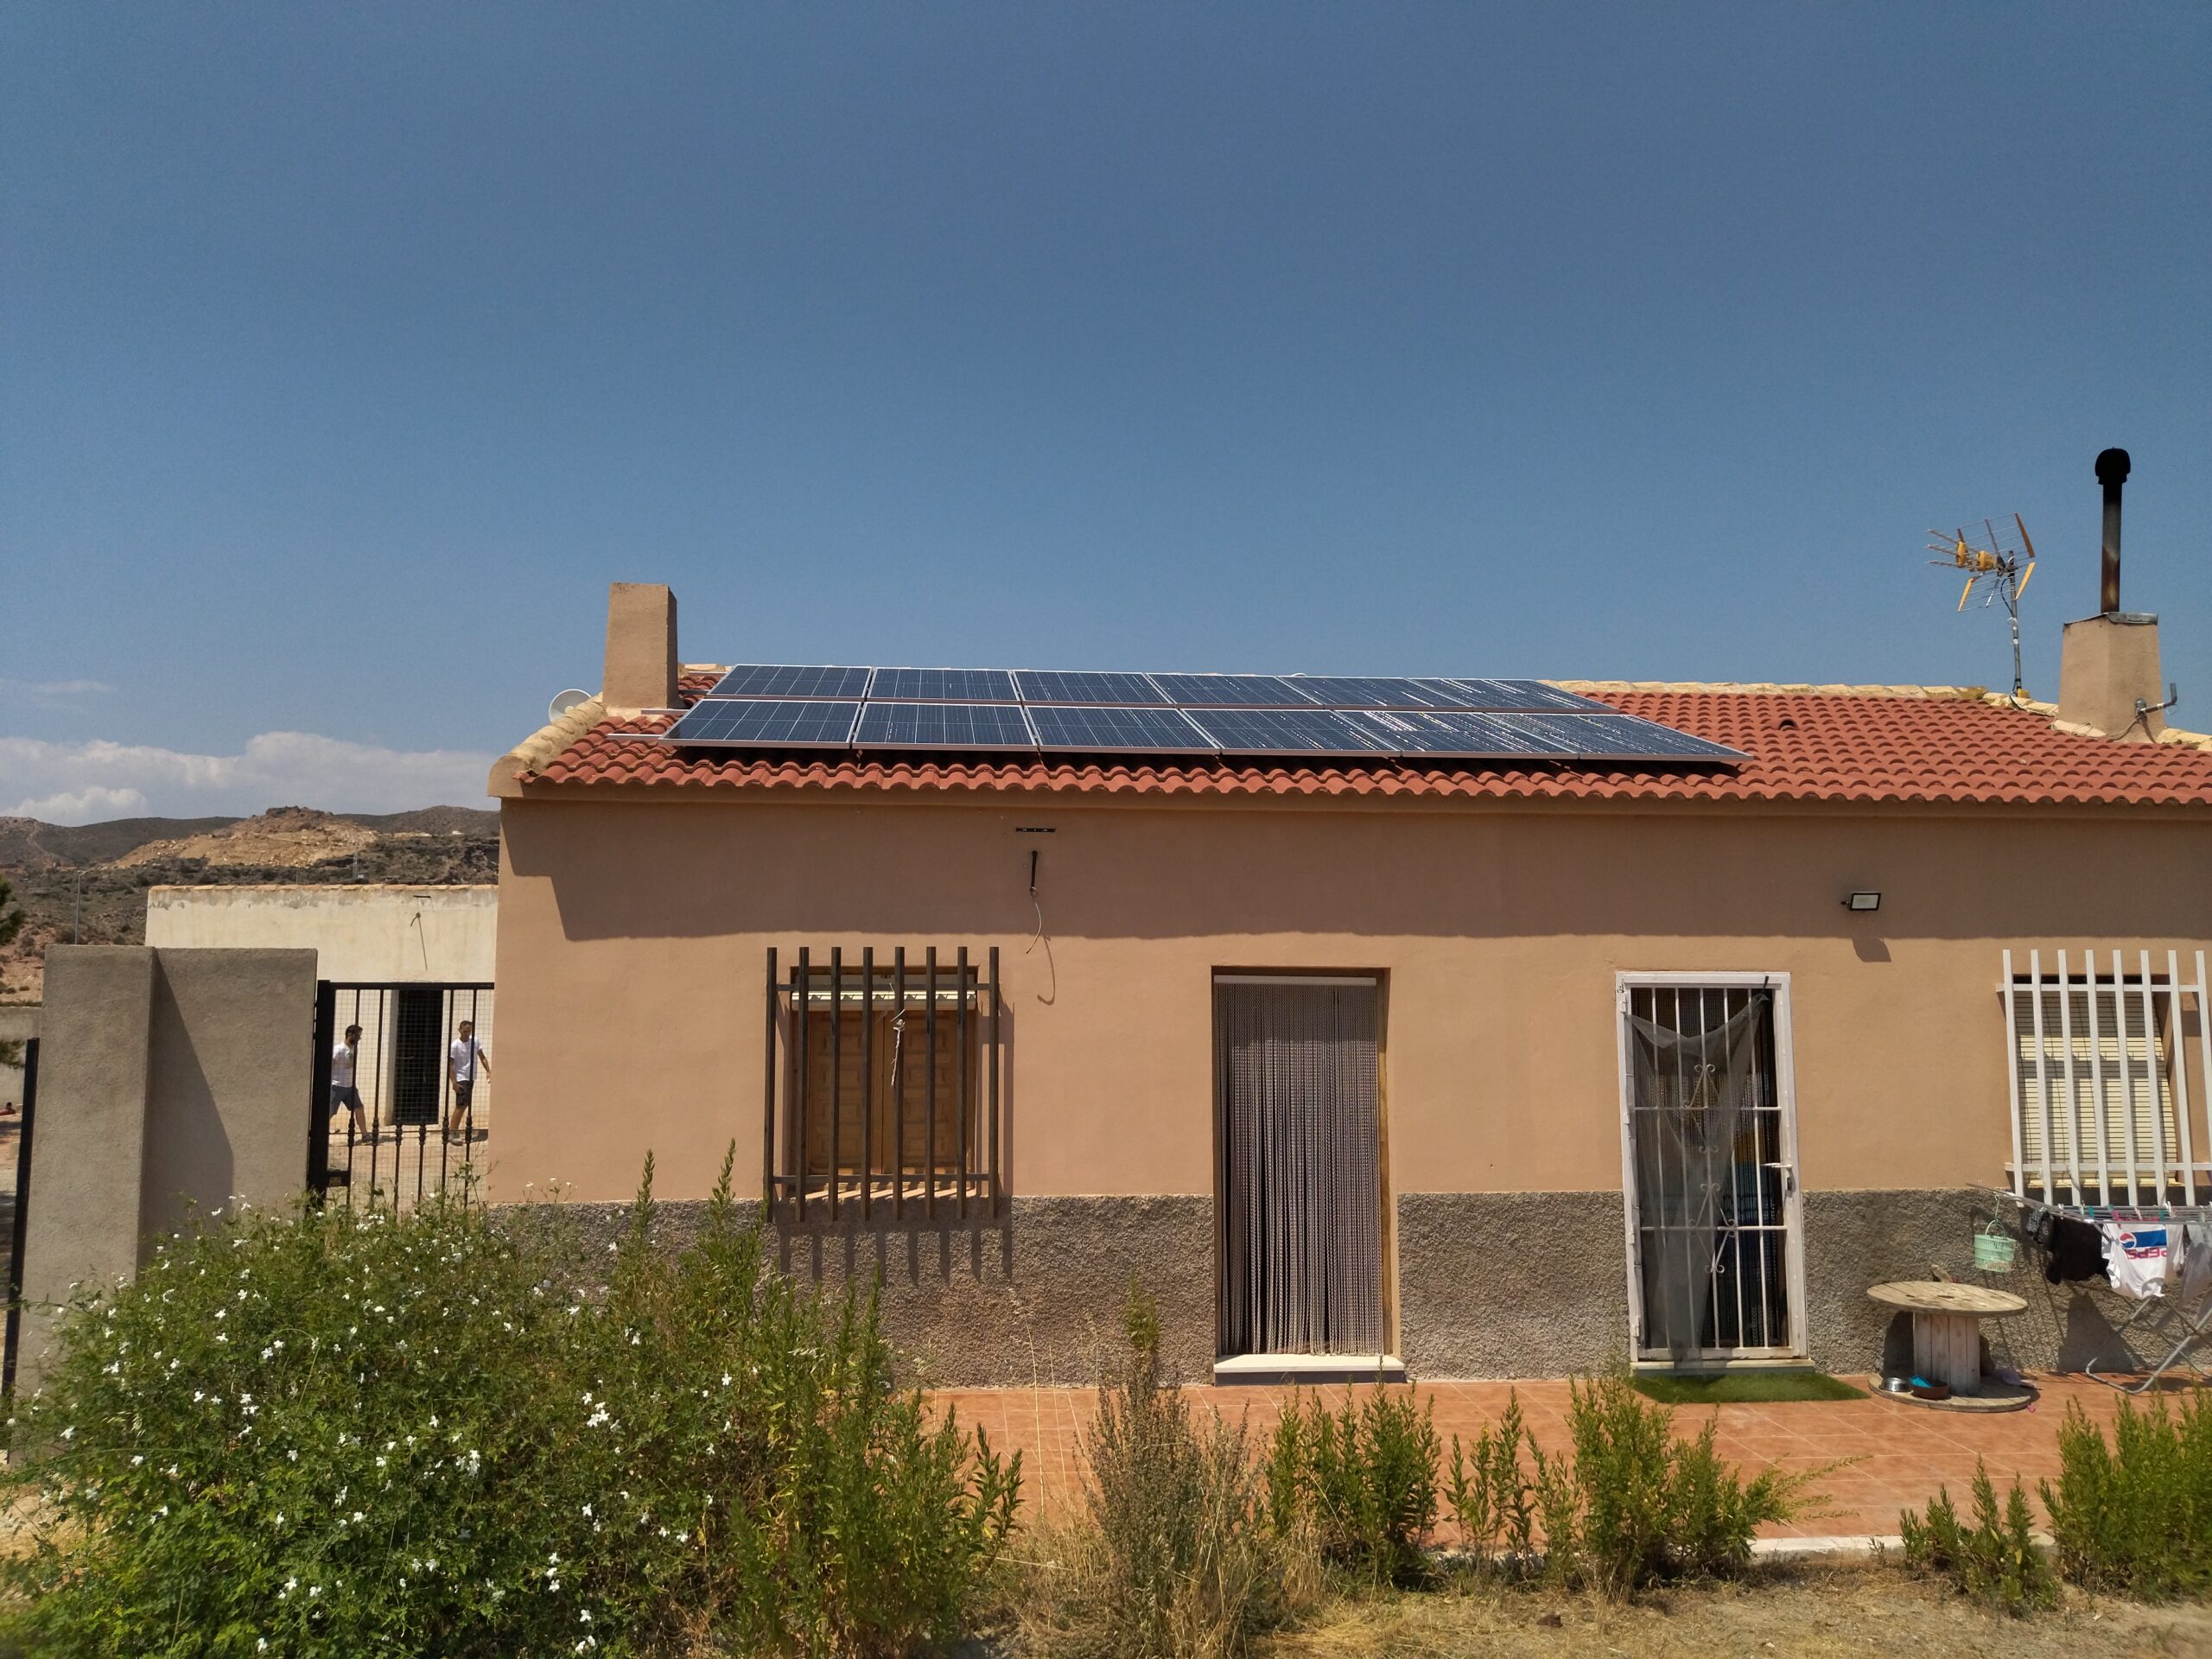 solar panels on coplanar roof